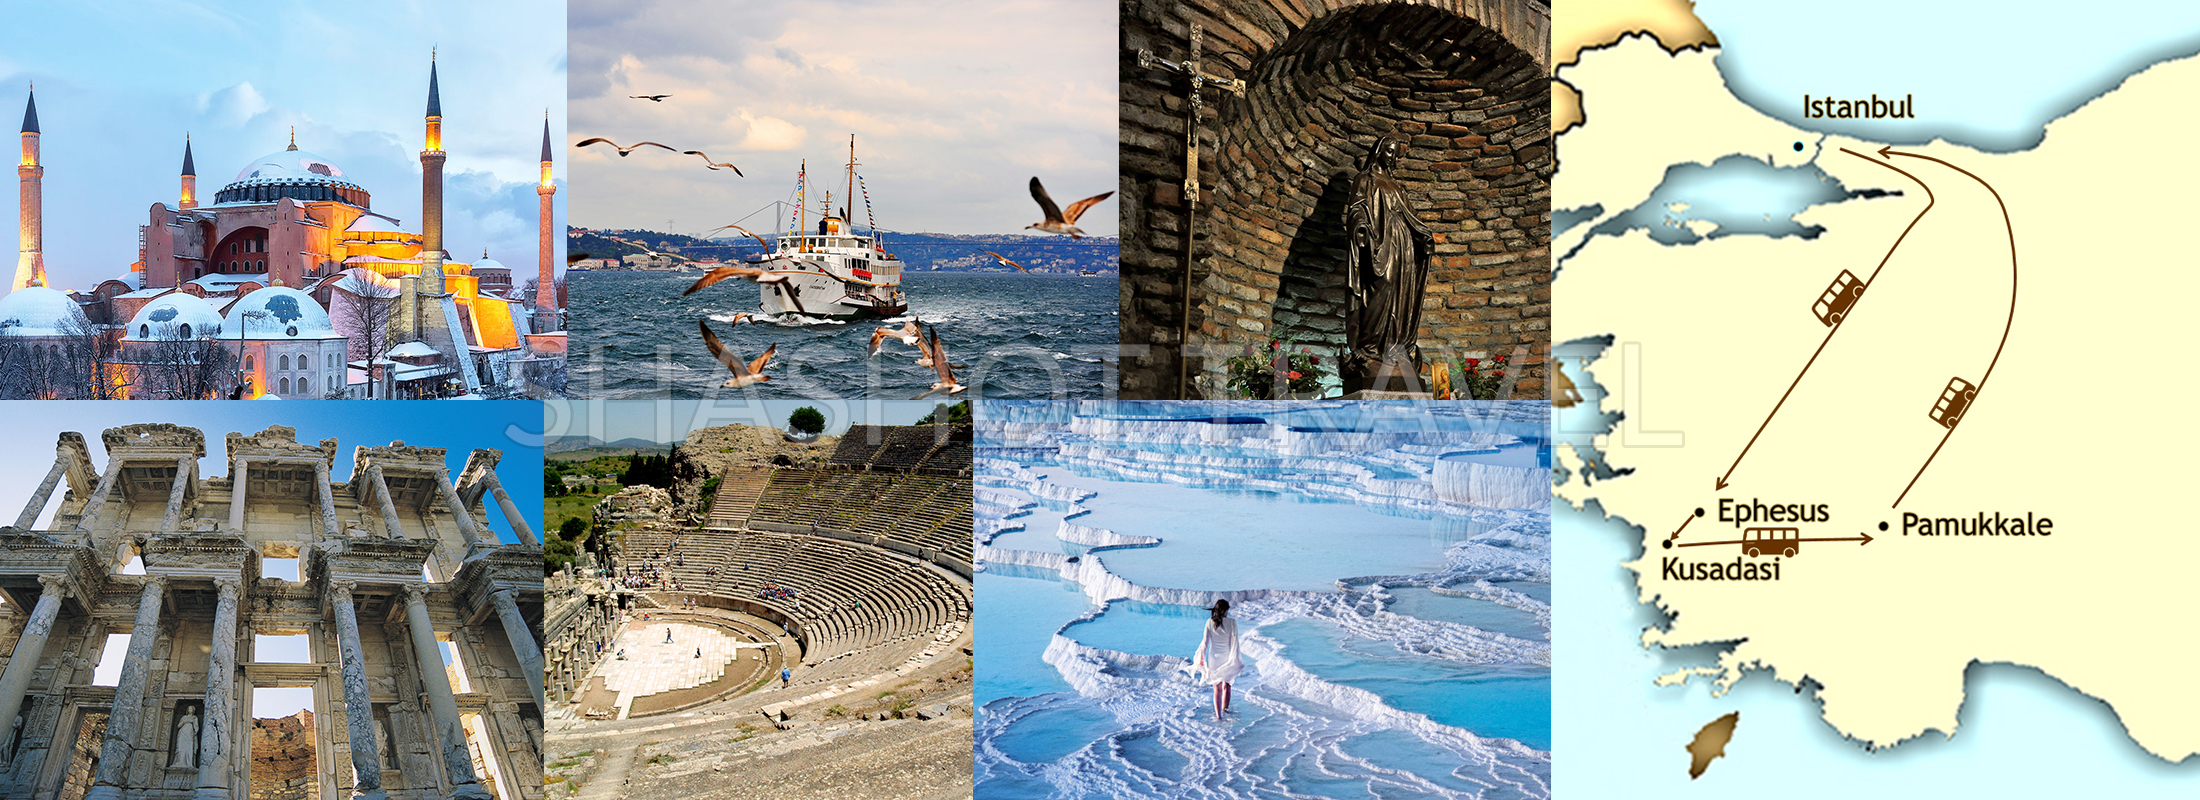 6-DAYS-TURKEY-PACKAGE-TOUR-ISTANBUL-EPHESUS-PAMUKKALE-by-bus-shashot-travel-turkiye-map